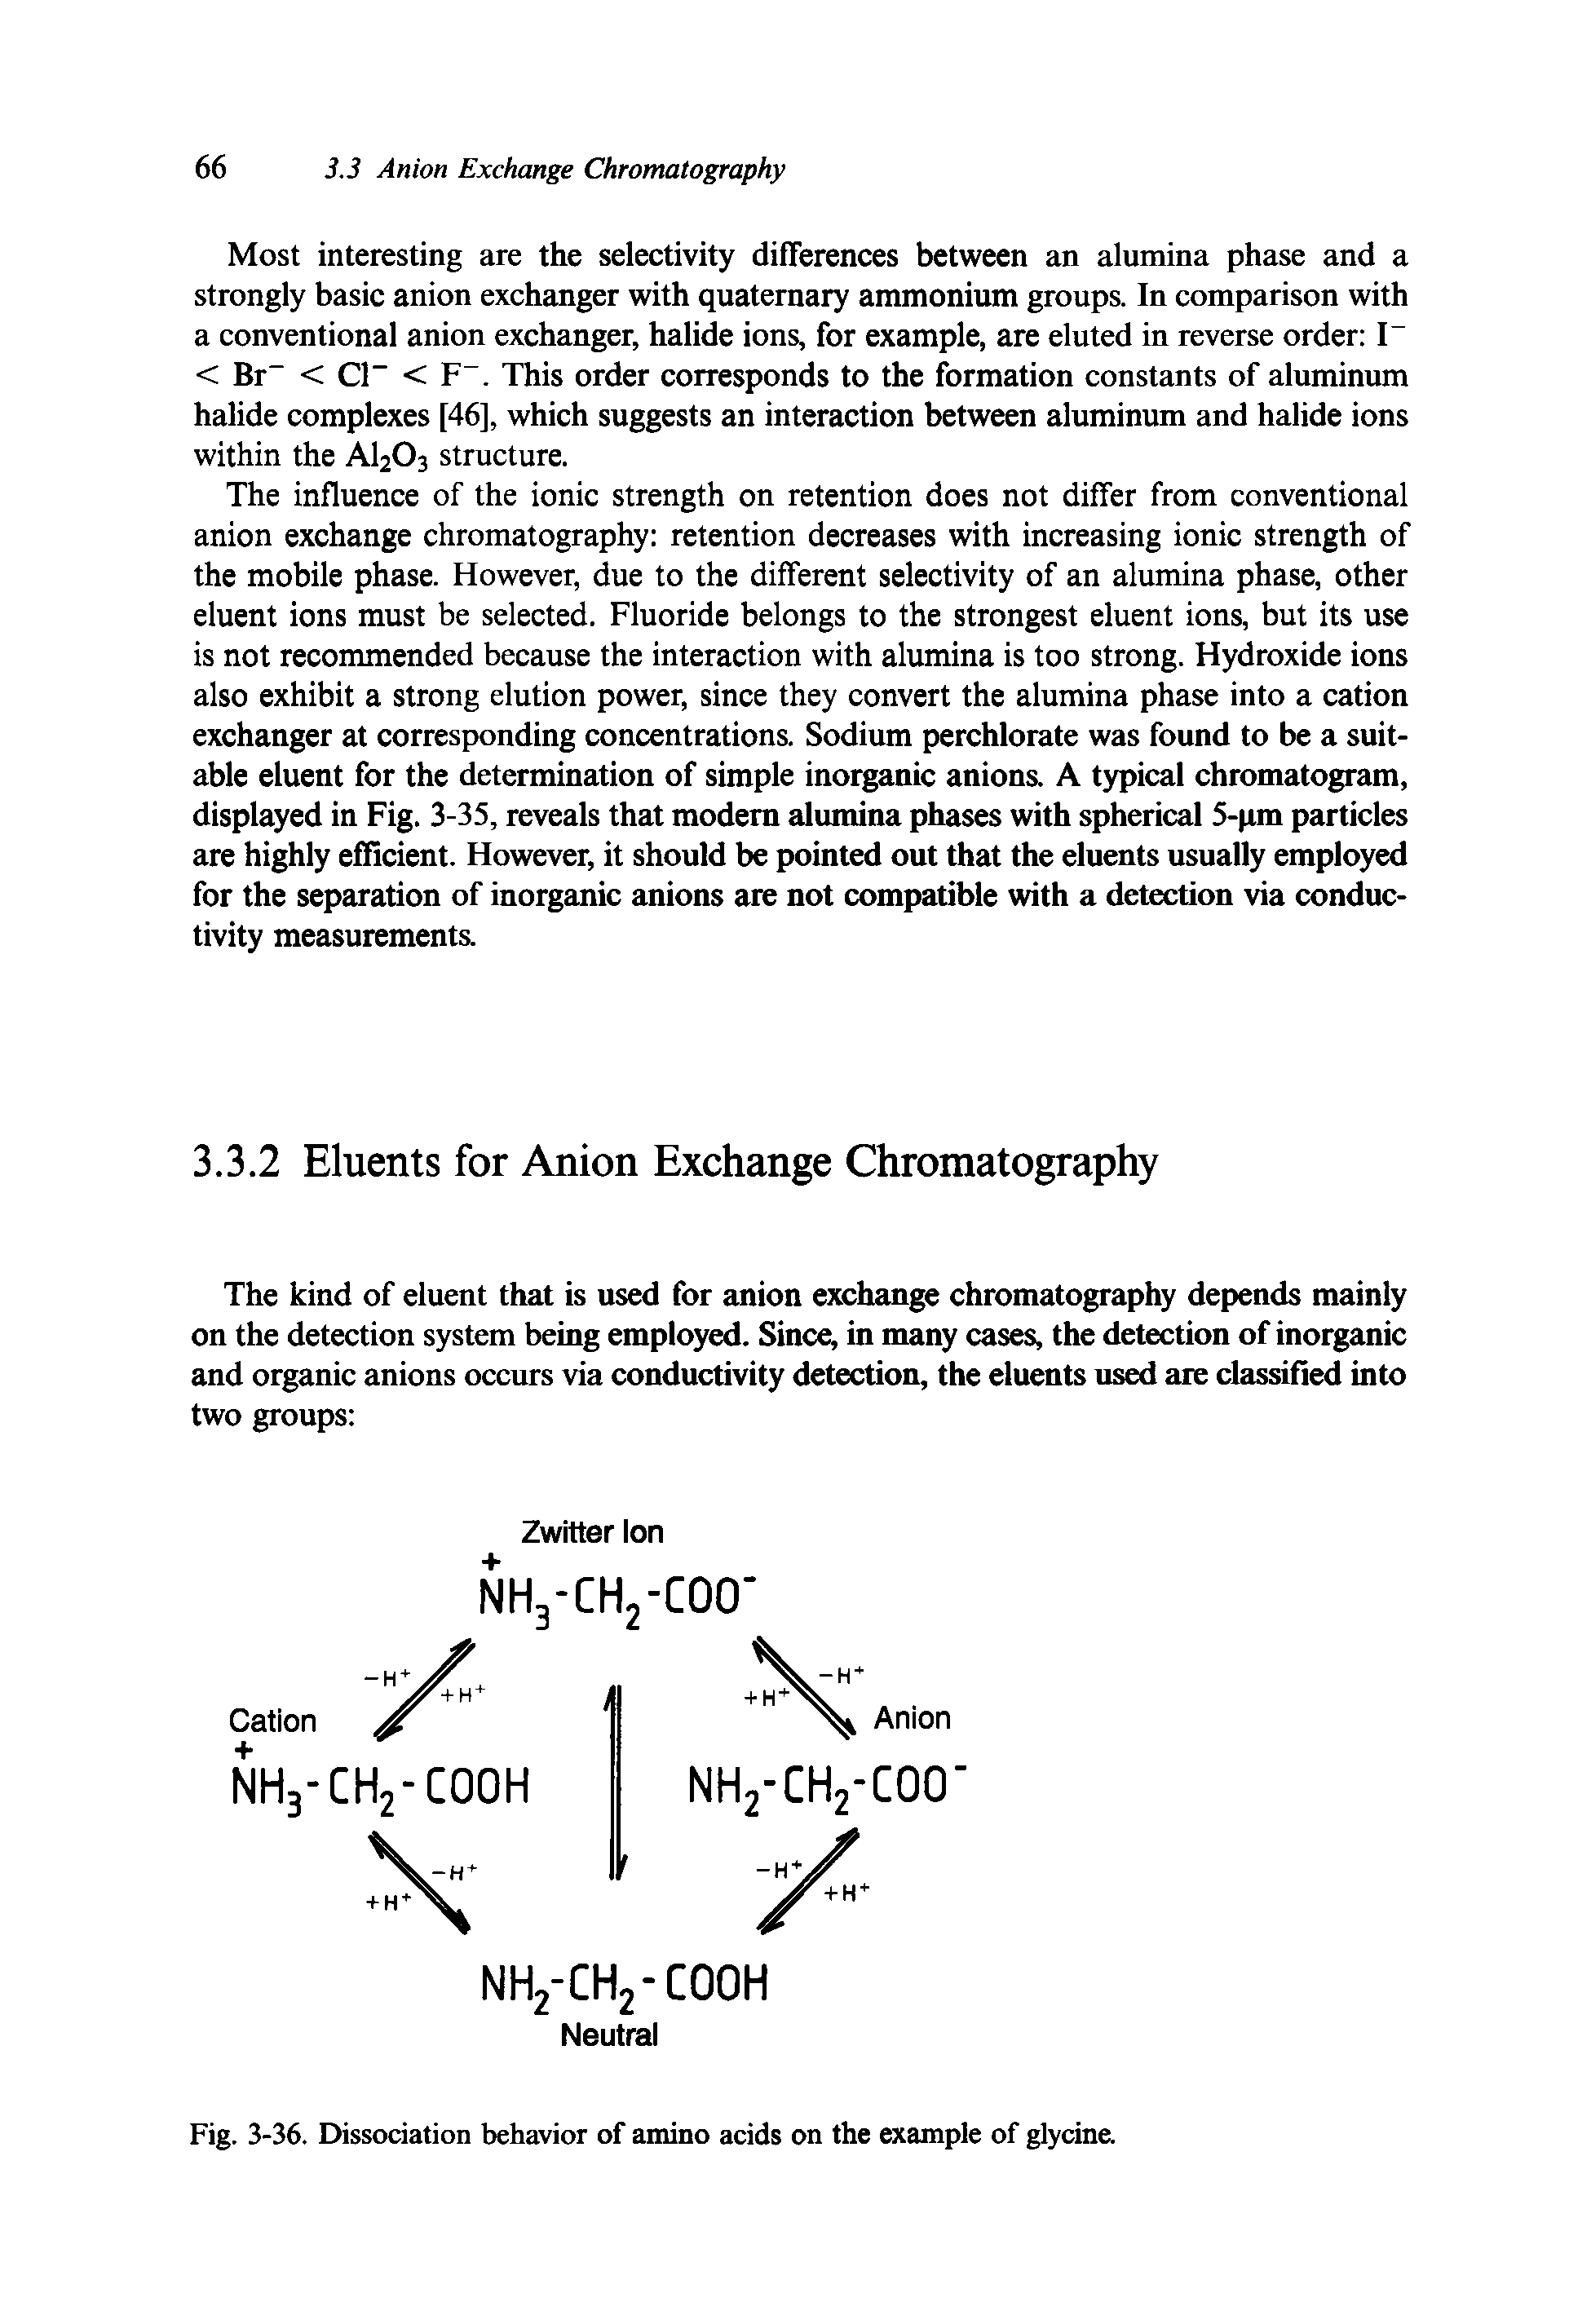 Fig. 3-36. Dissociation behavior of amino acids on the example of glycine.